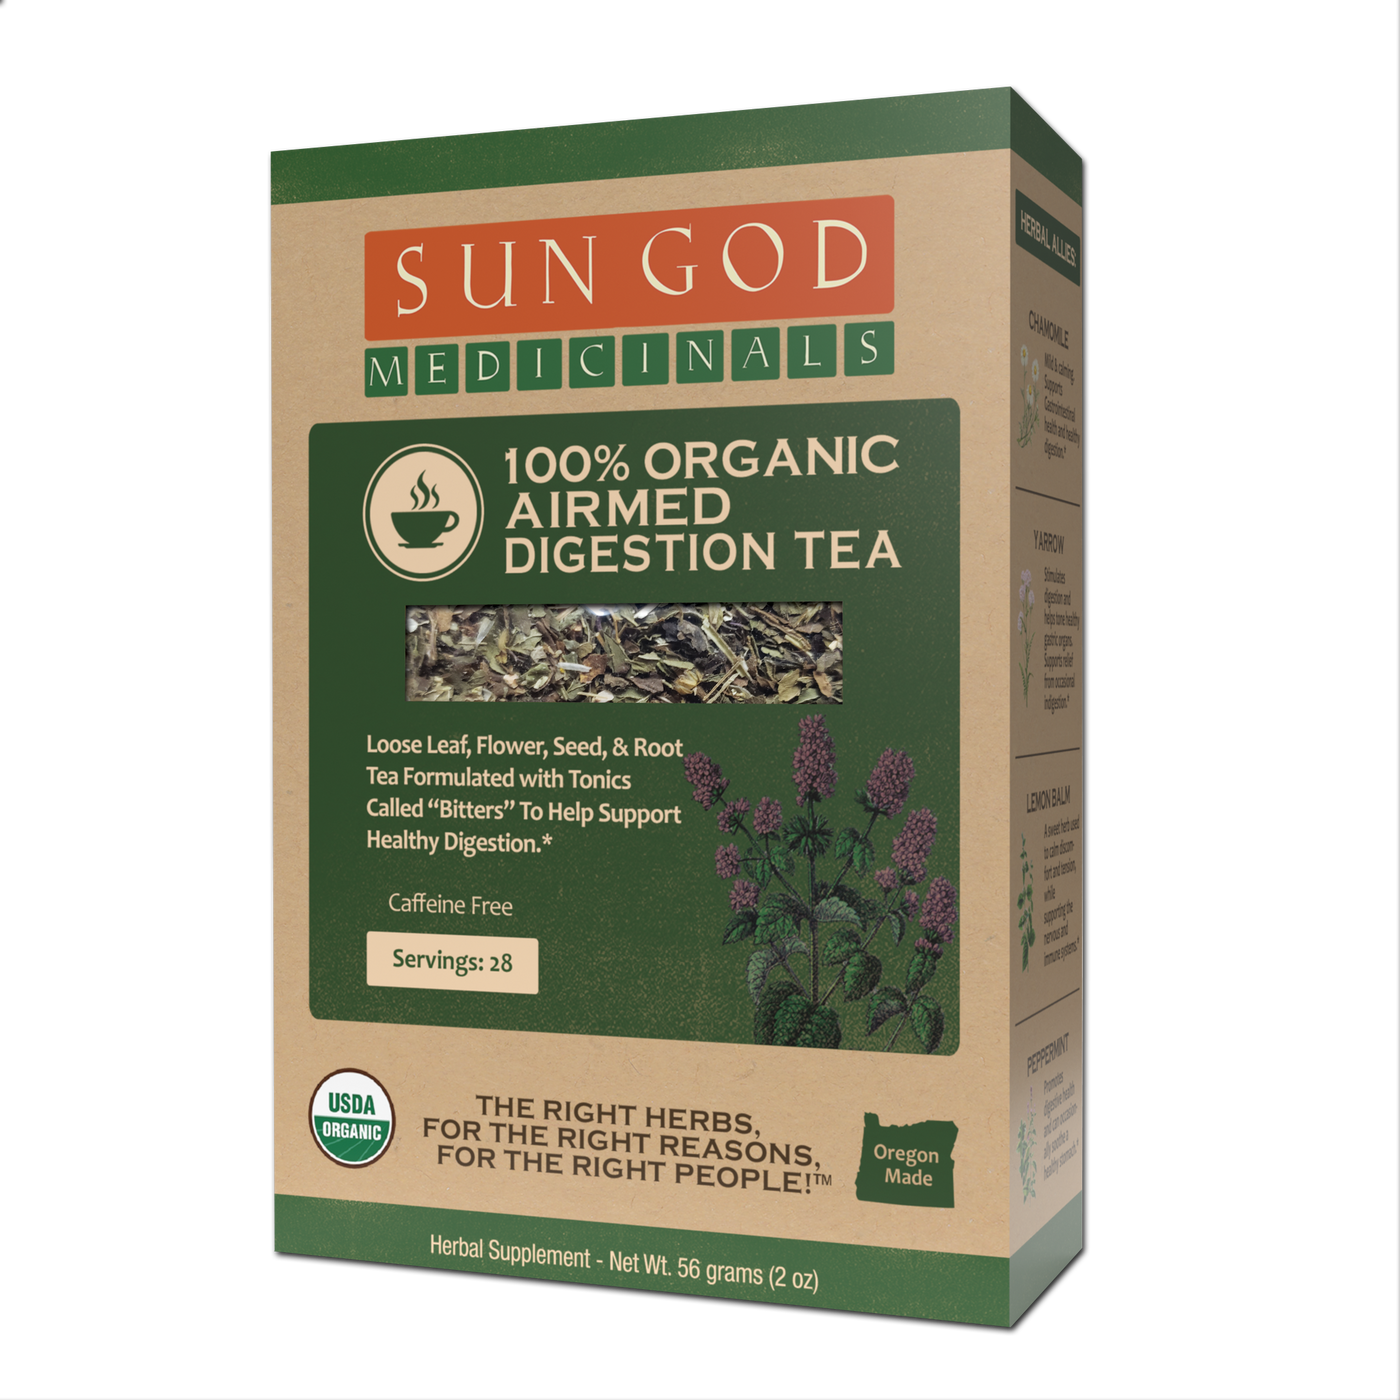 Airmed Digestion Organic Herbal Tea - Sun God Medicinals